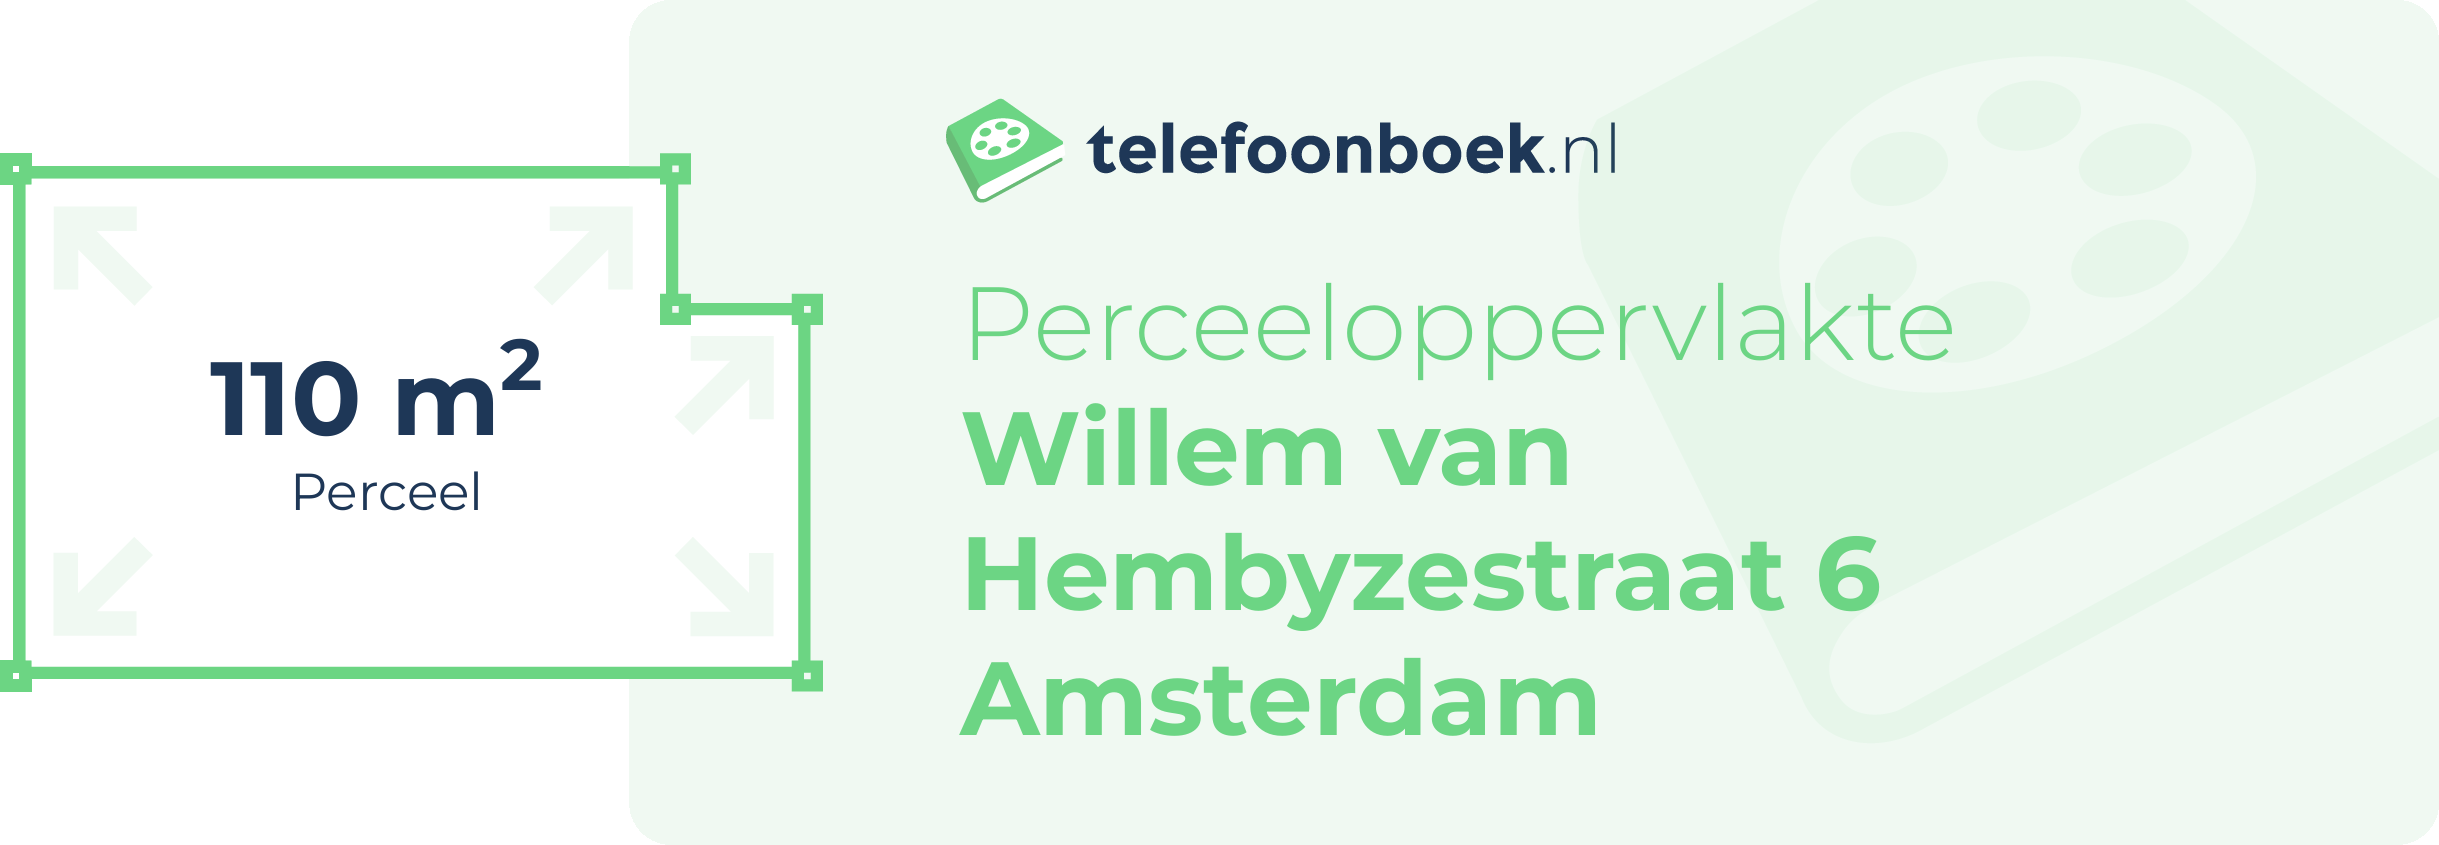 Perceeloppervlakte Willem Van Hembyzestraat 6 Amsterdam